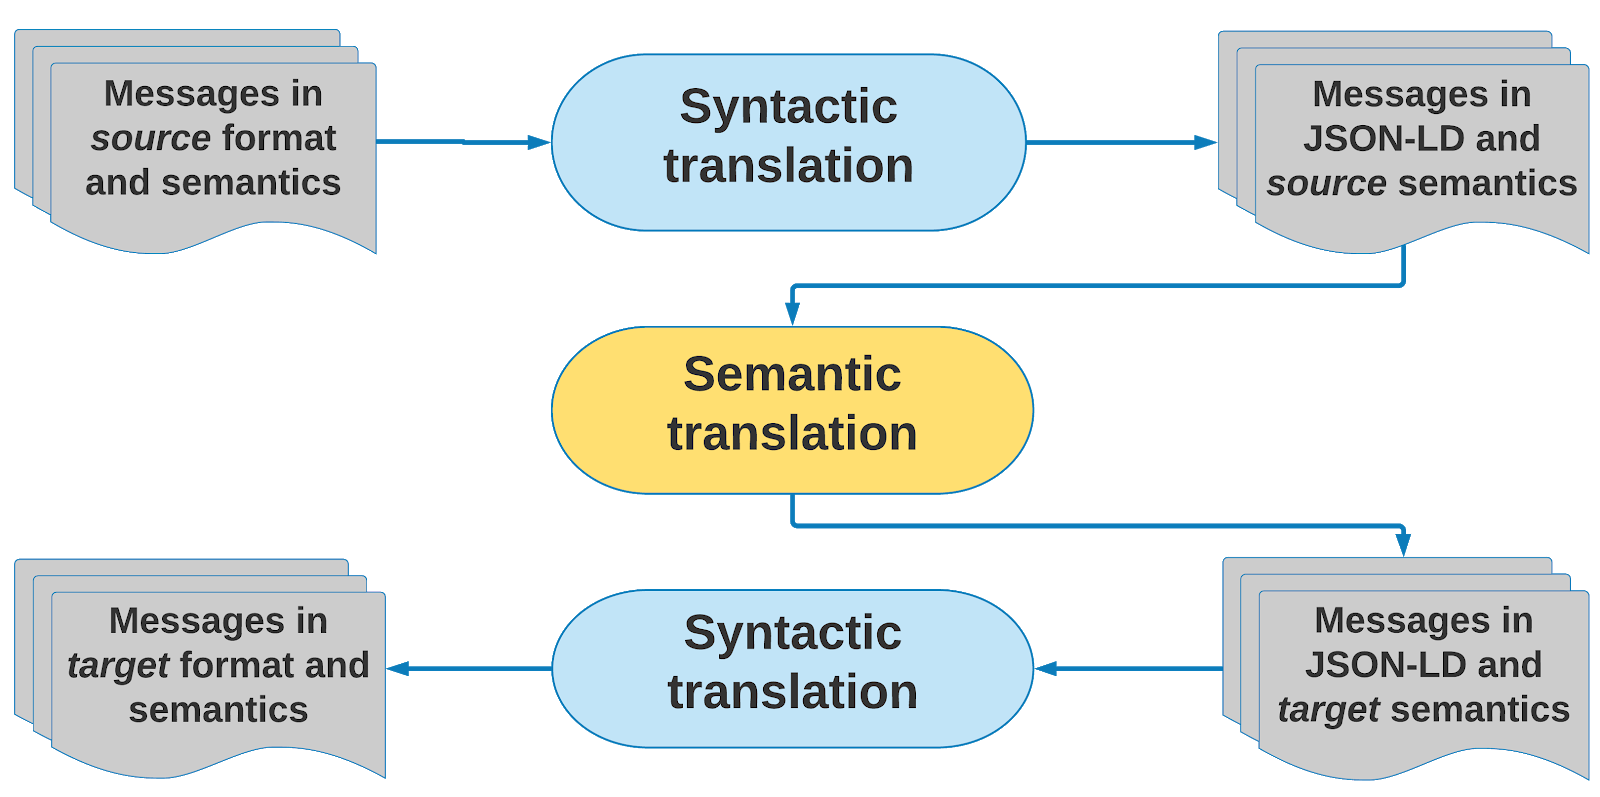 translation process